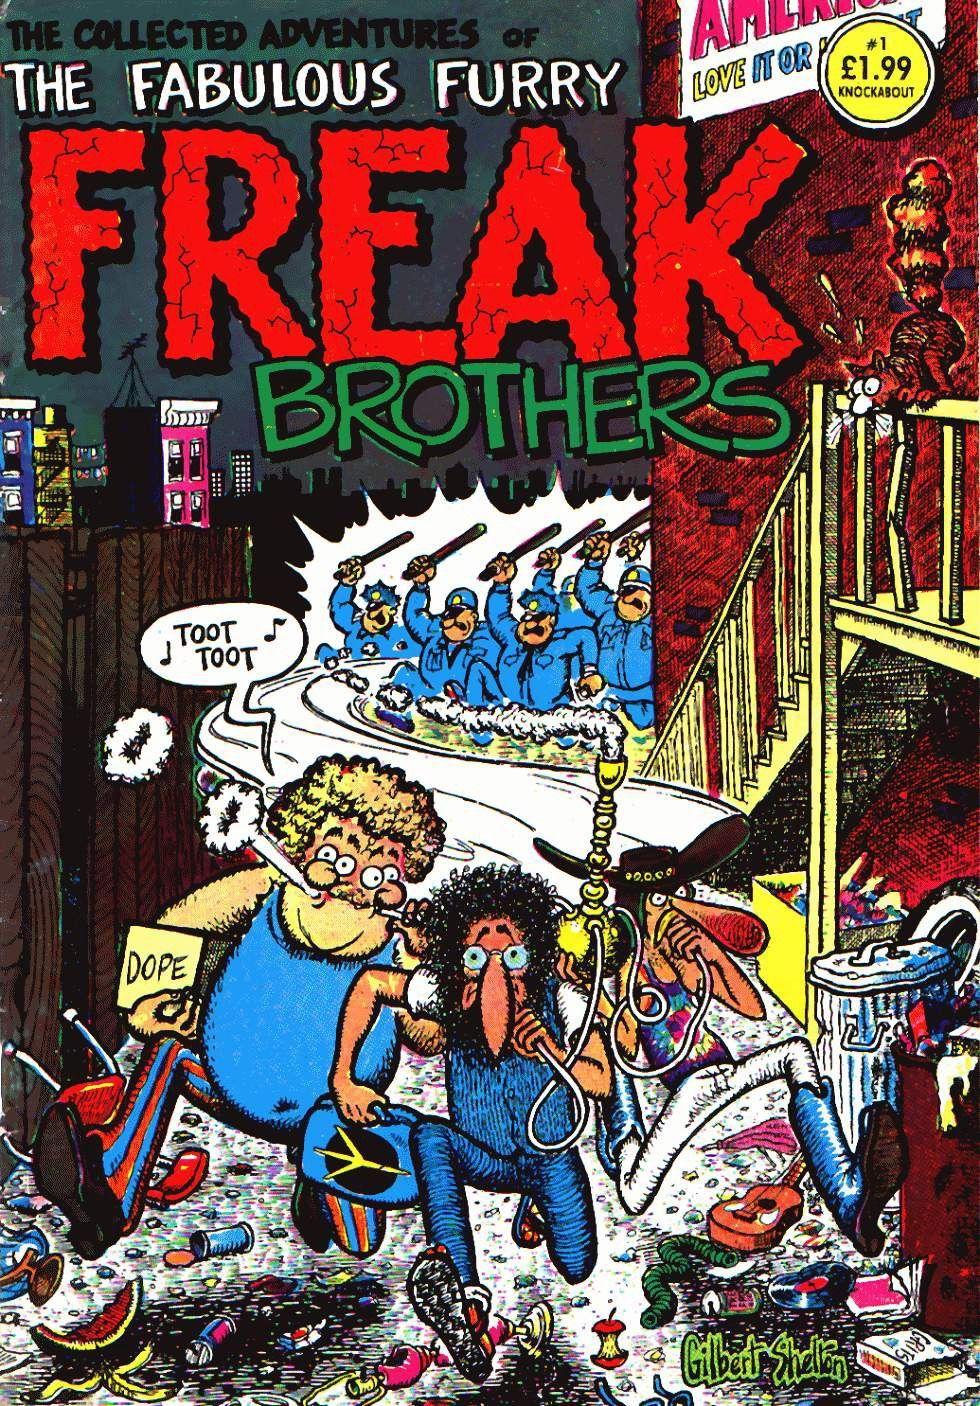 The Fabulous Furry Freak Brothers. Comix & Stuff